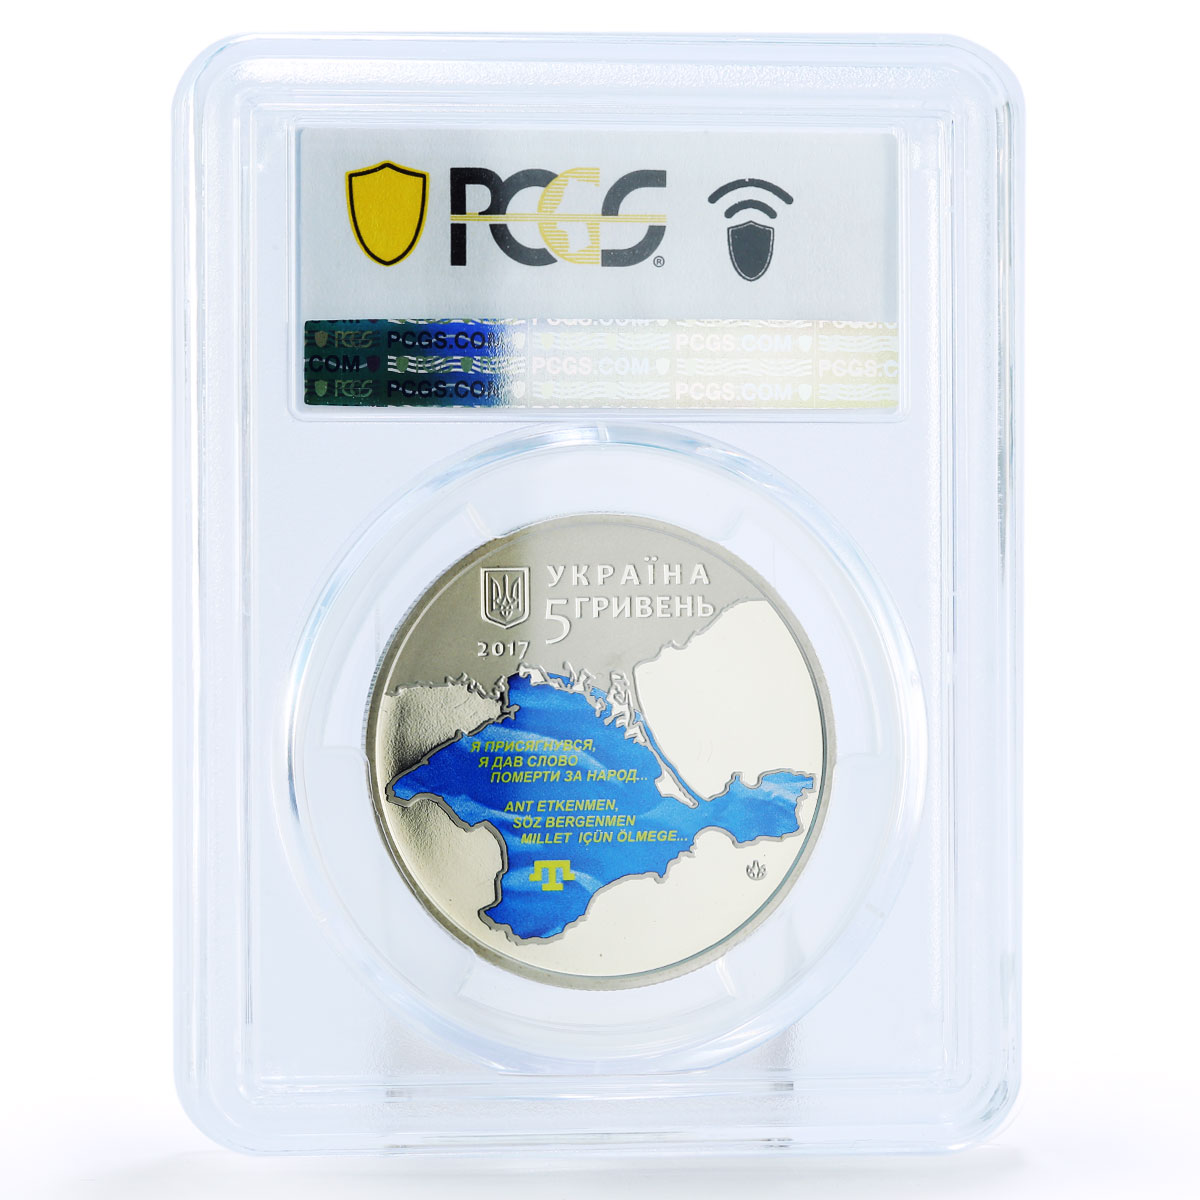 Ukraine 5 hryvnias 1st Crimean Kurultai Tatar People MS69 PCGS CuNi coin 2017